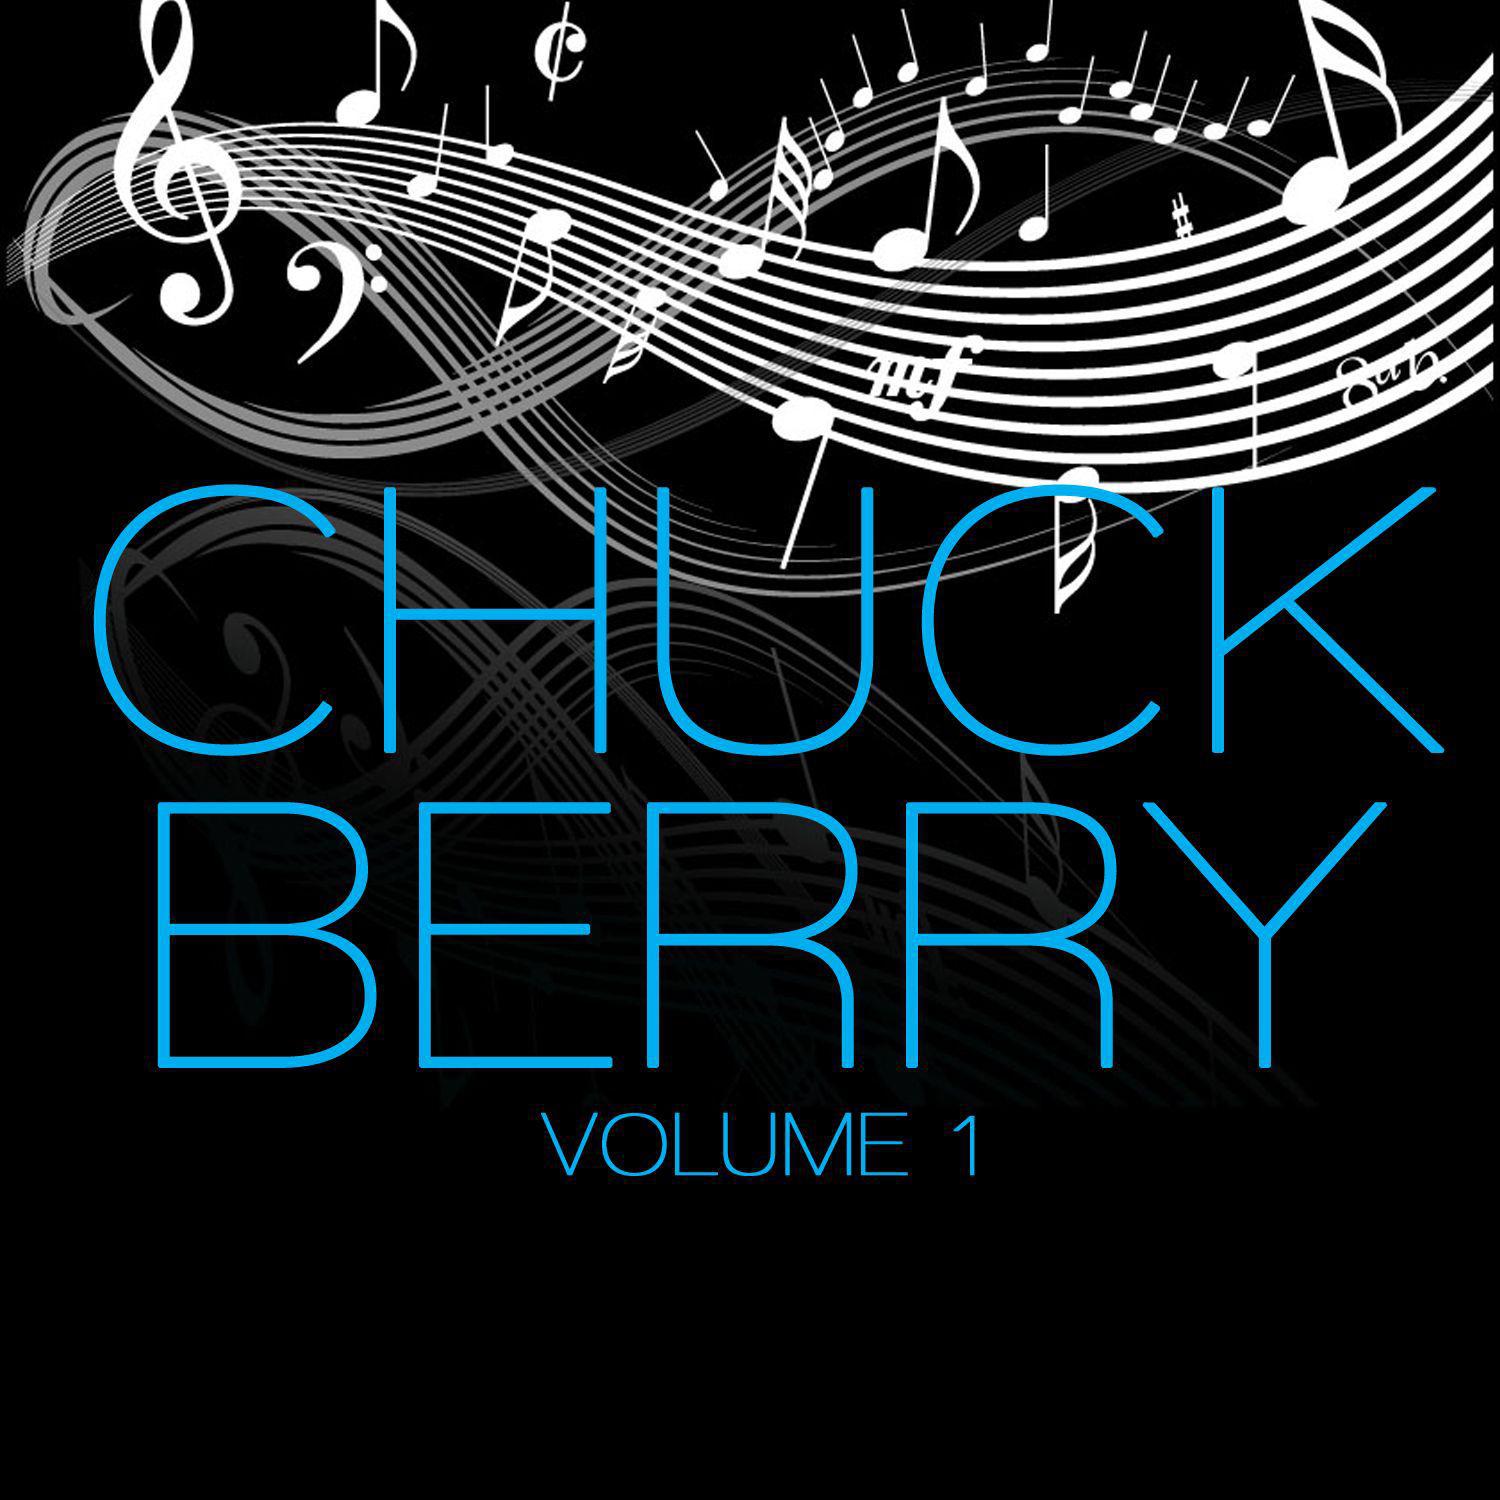 Chuck Berry Volume 1